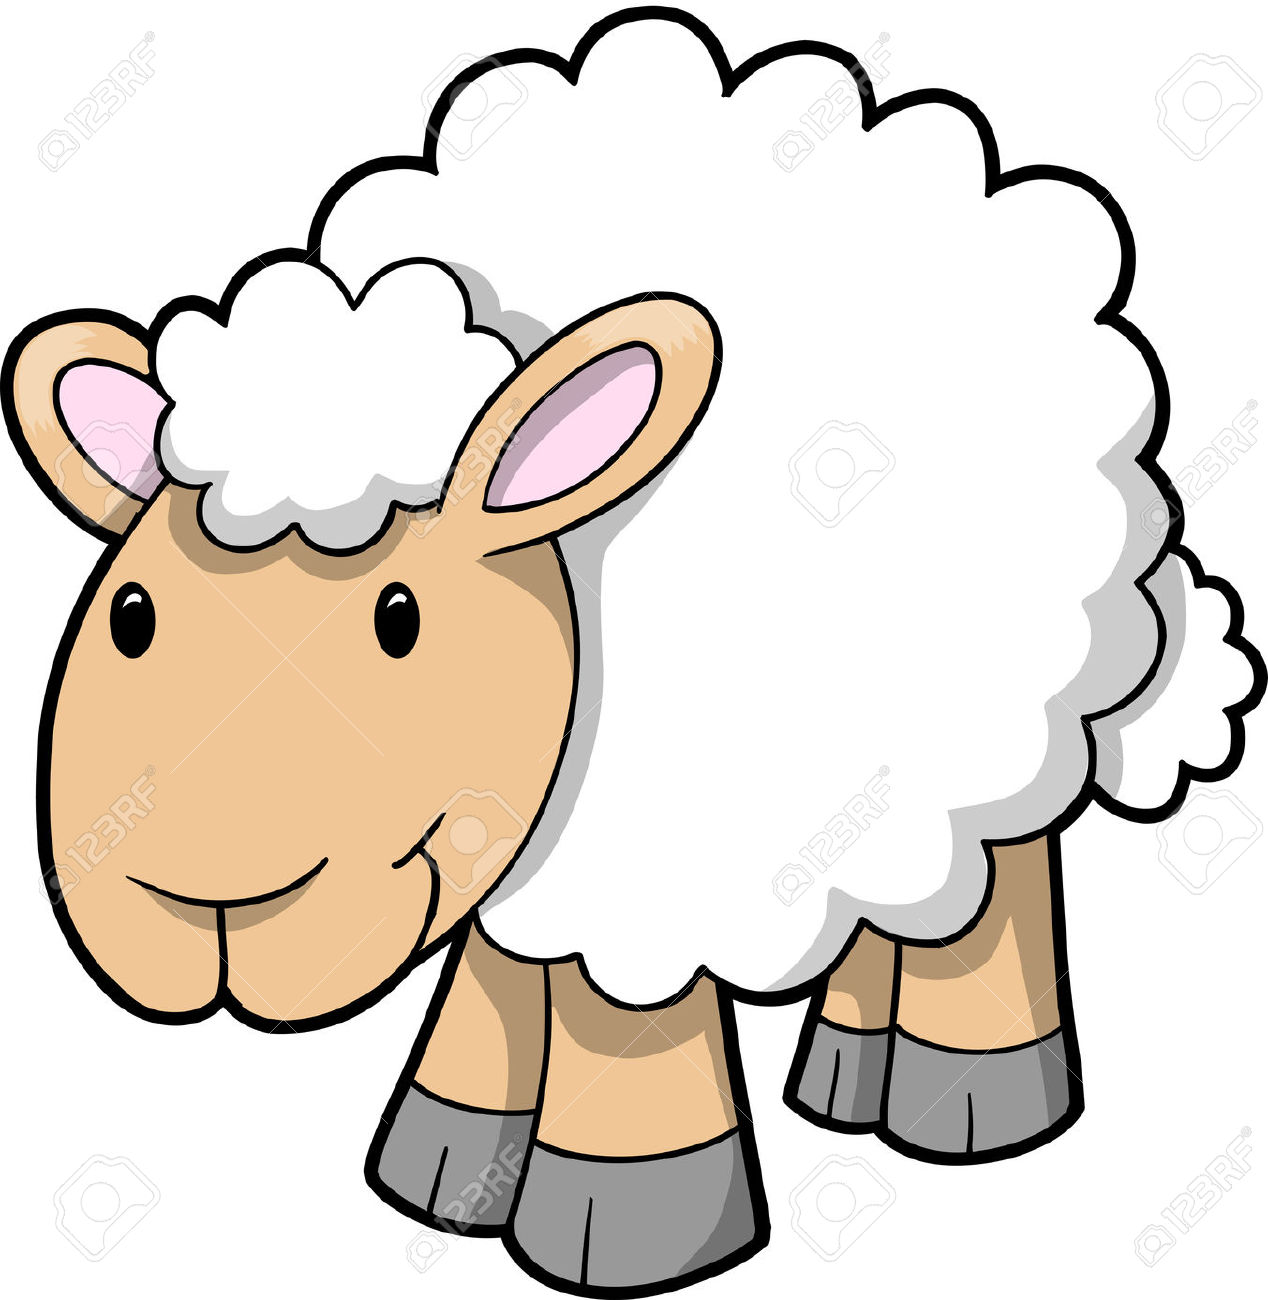 Png Sheep Cartoon - Pin Sheep Clipart Cartoon #1, Transparent background PNG HD thumbnail